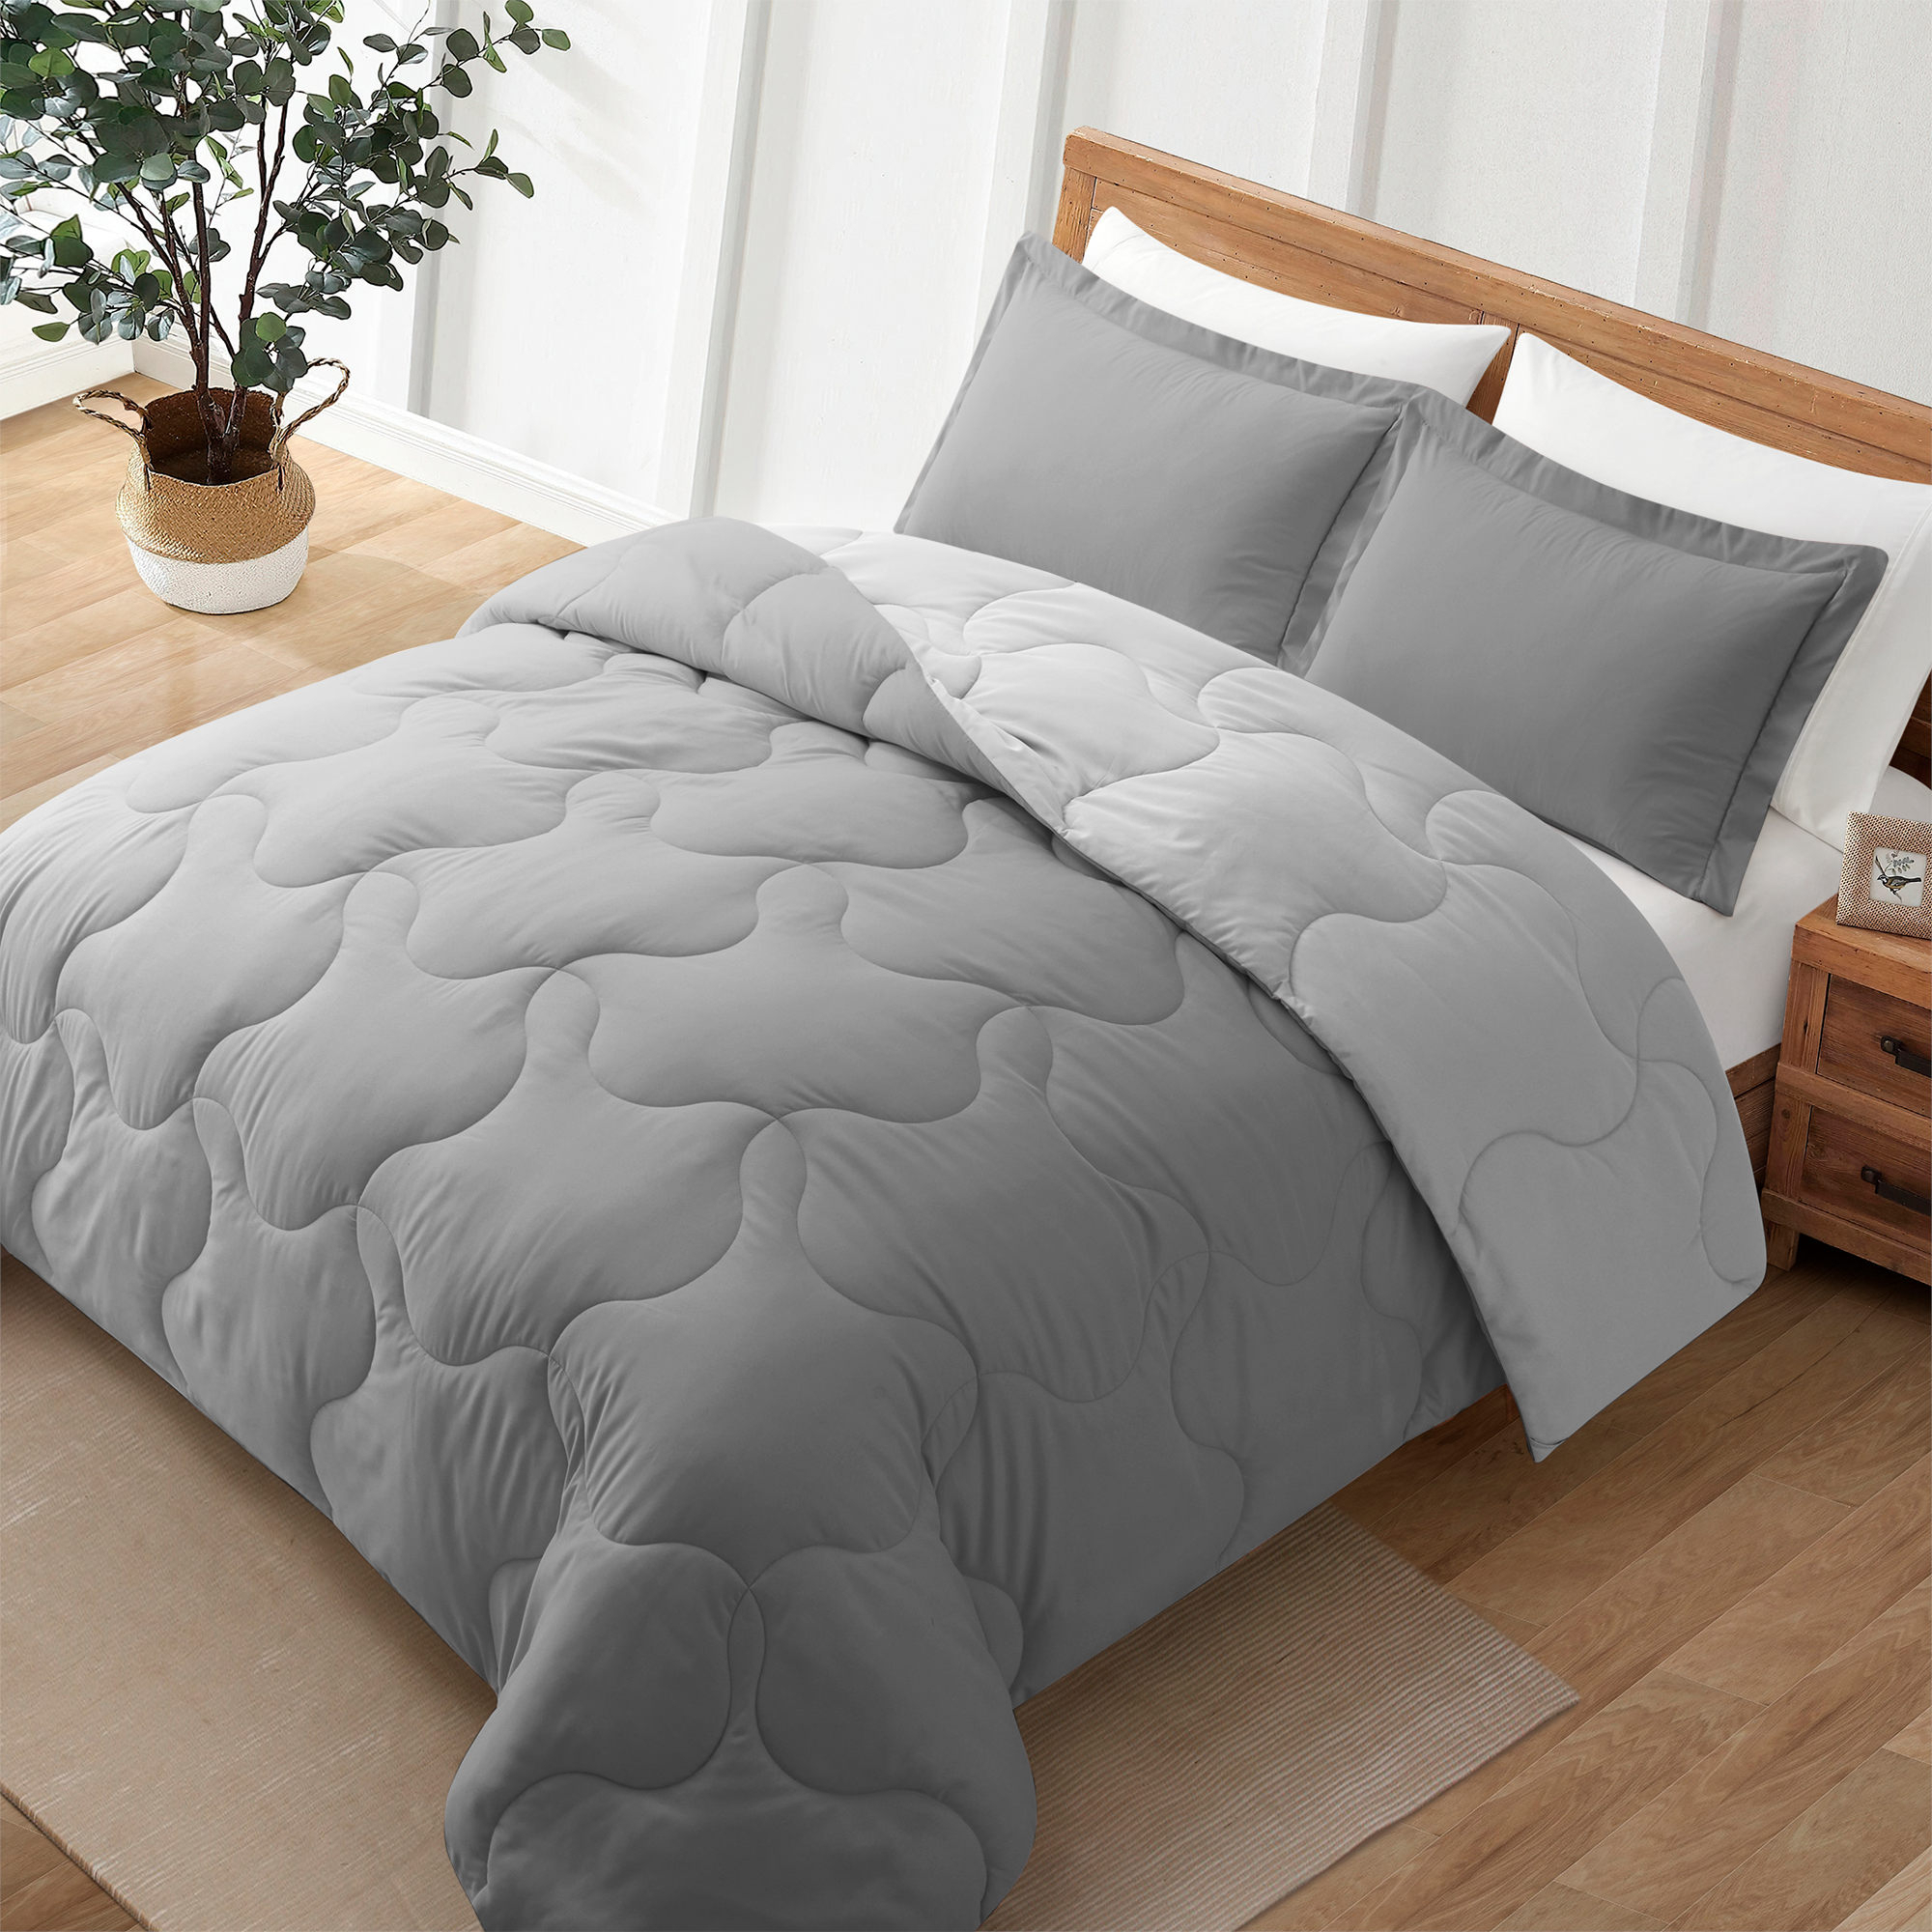 3 Or 2 Pieces Lightweight Reversible Comforter Set With Pillow Shams - Dark Grey/Light Grey, Twin